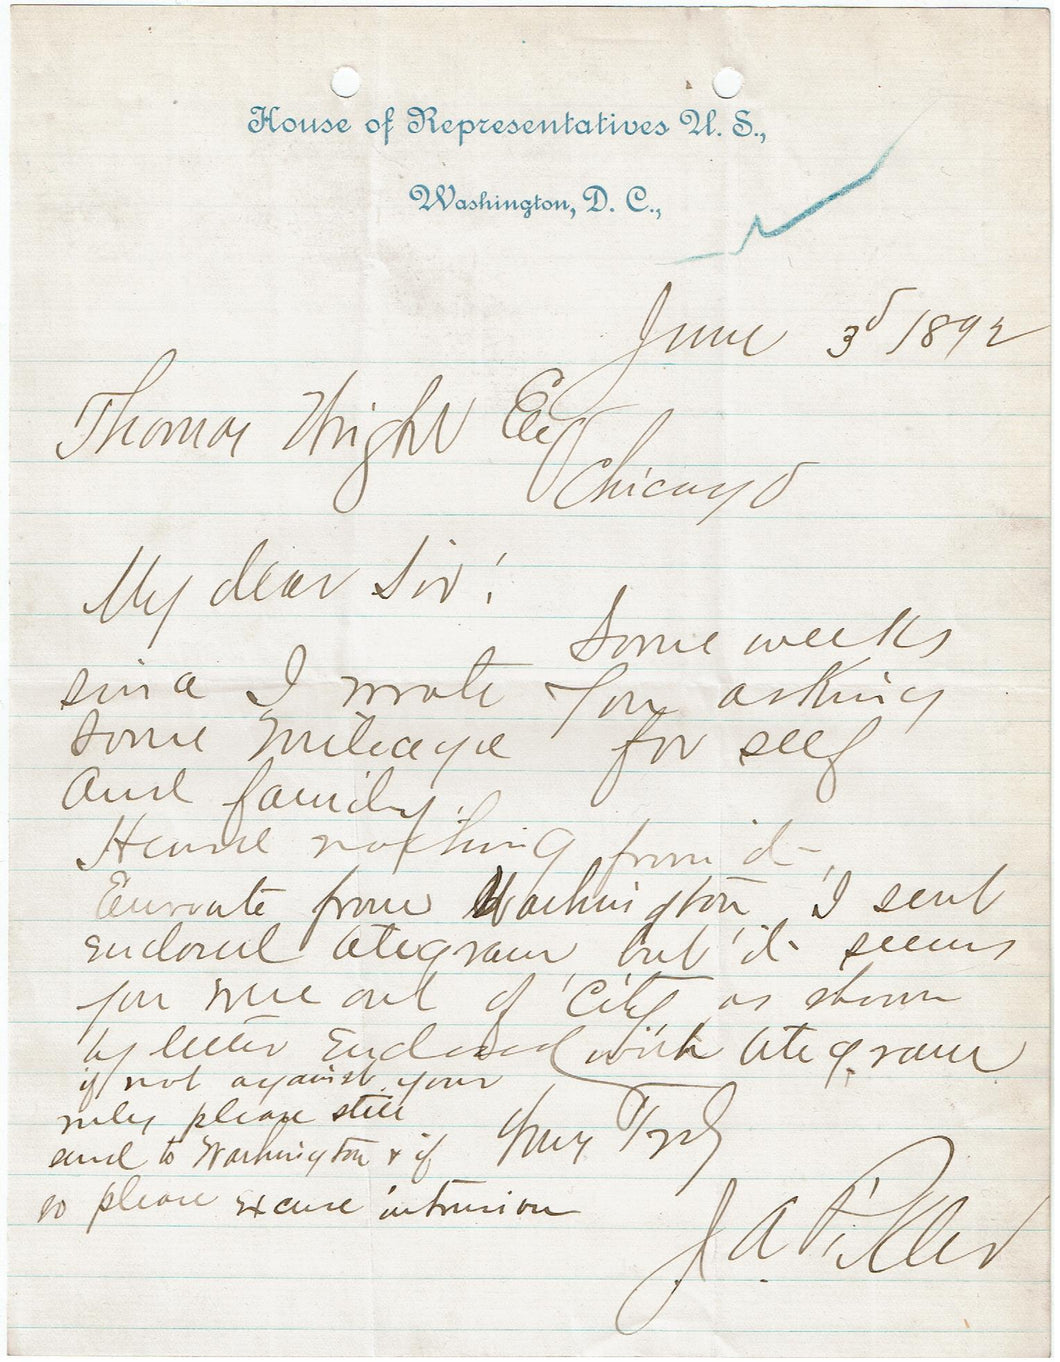 US House of Representatives Letter signed by Representative Pickler 1892